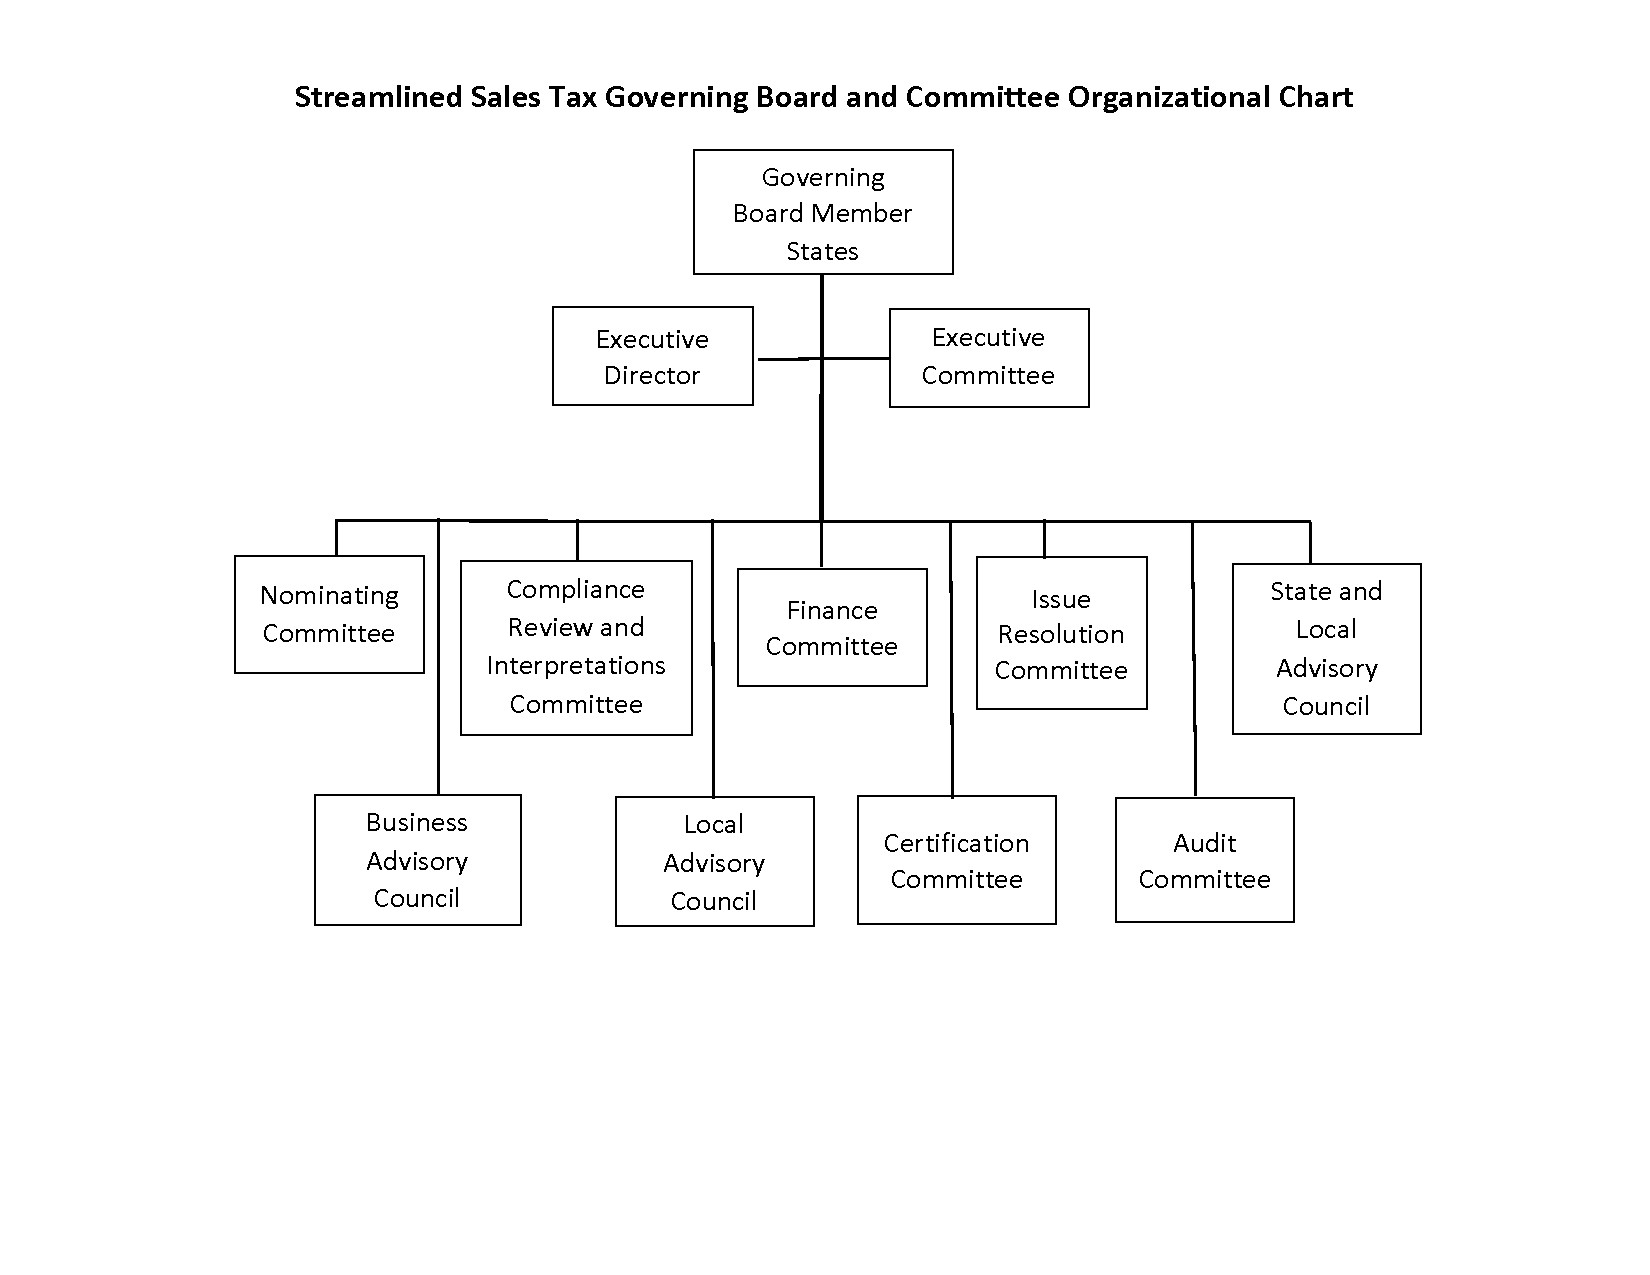 Committee Organization Chart